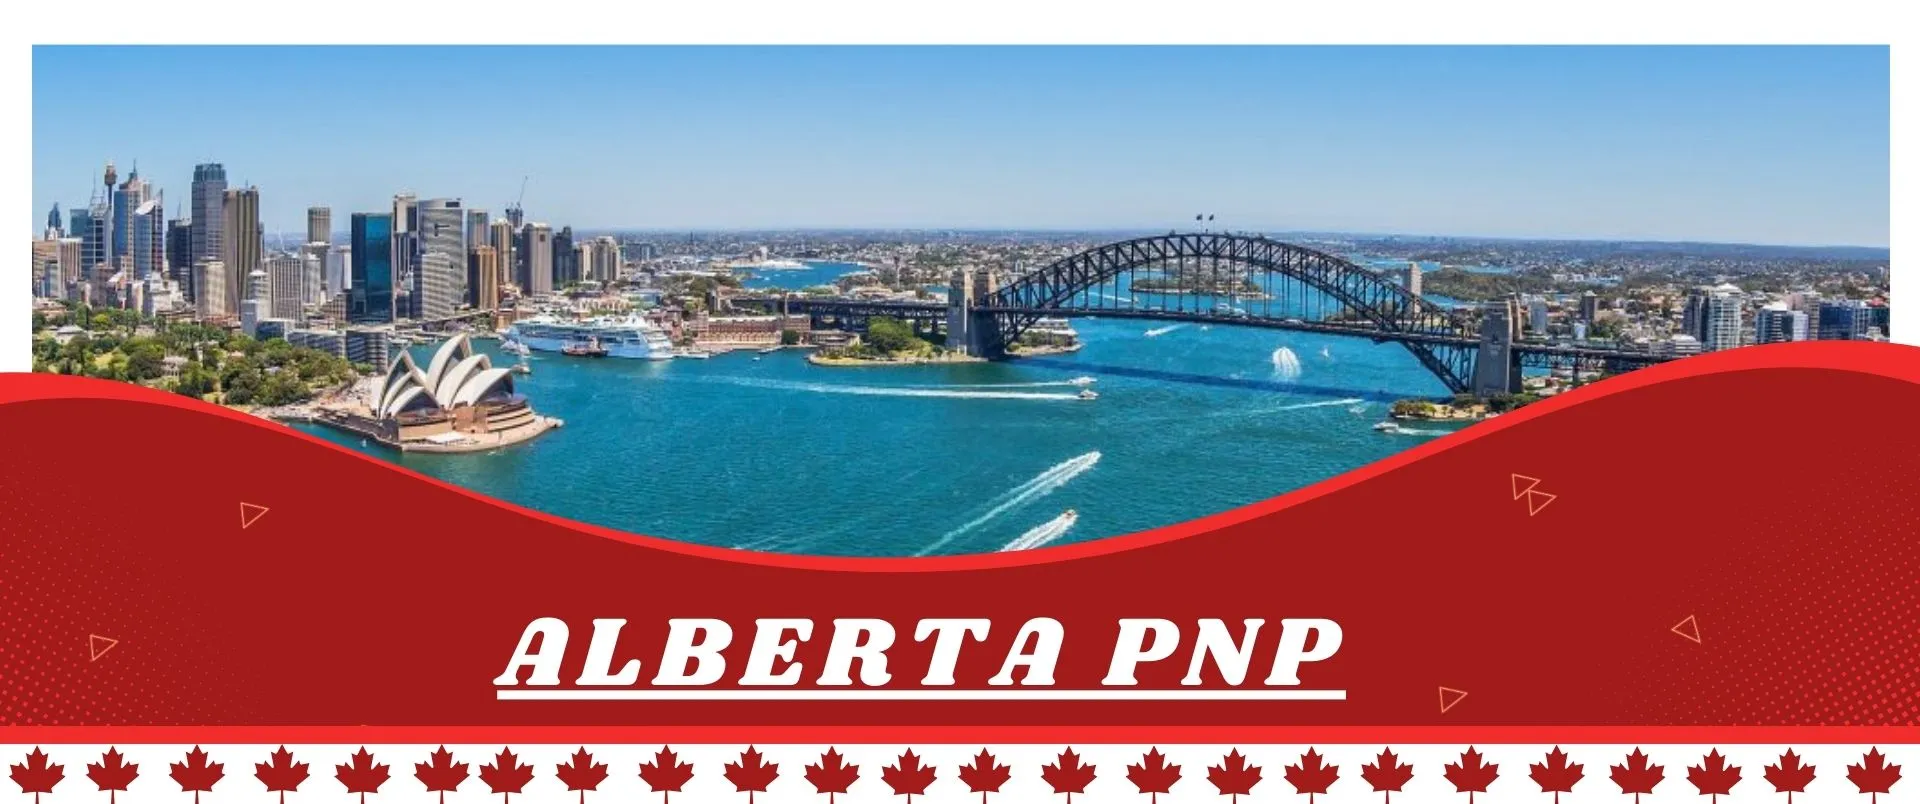 Alberta PNP Bridge view in Day time createdd by Isha Immigration